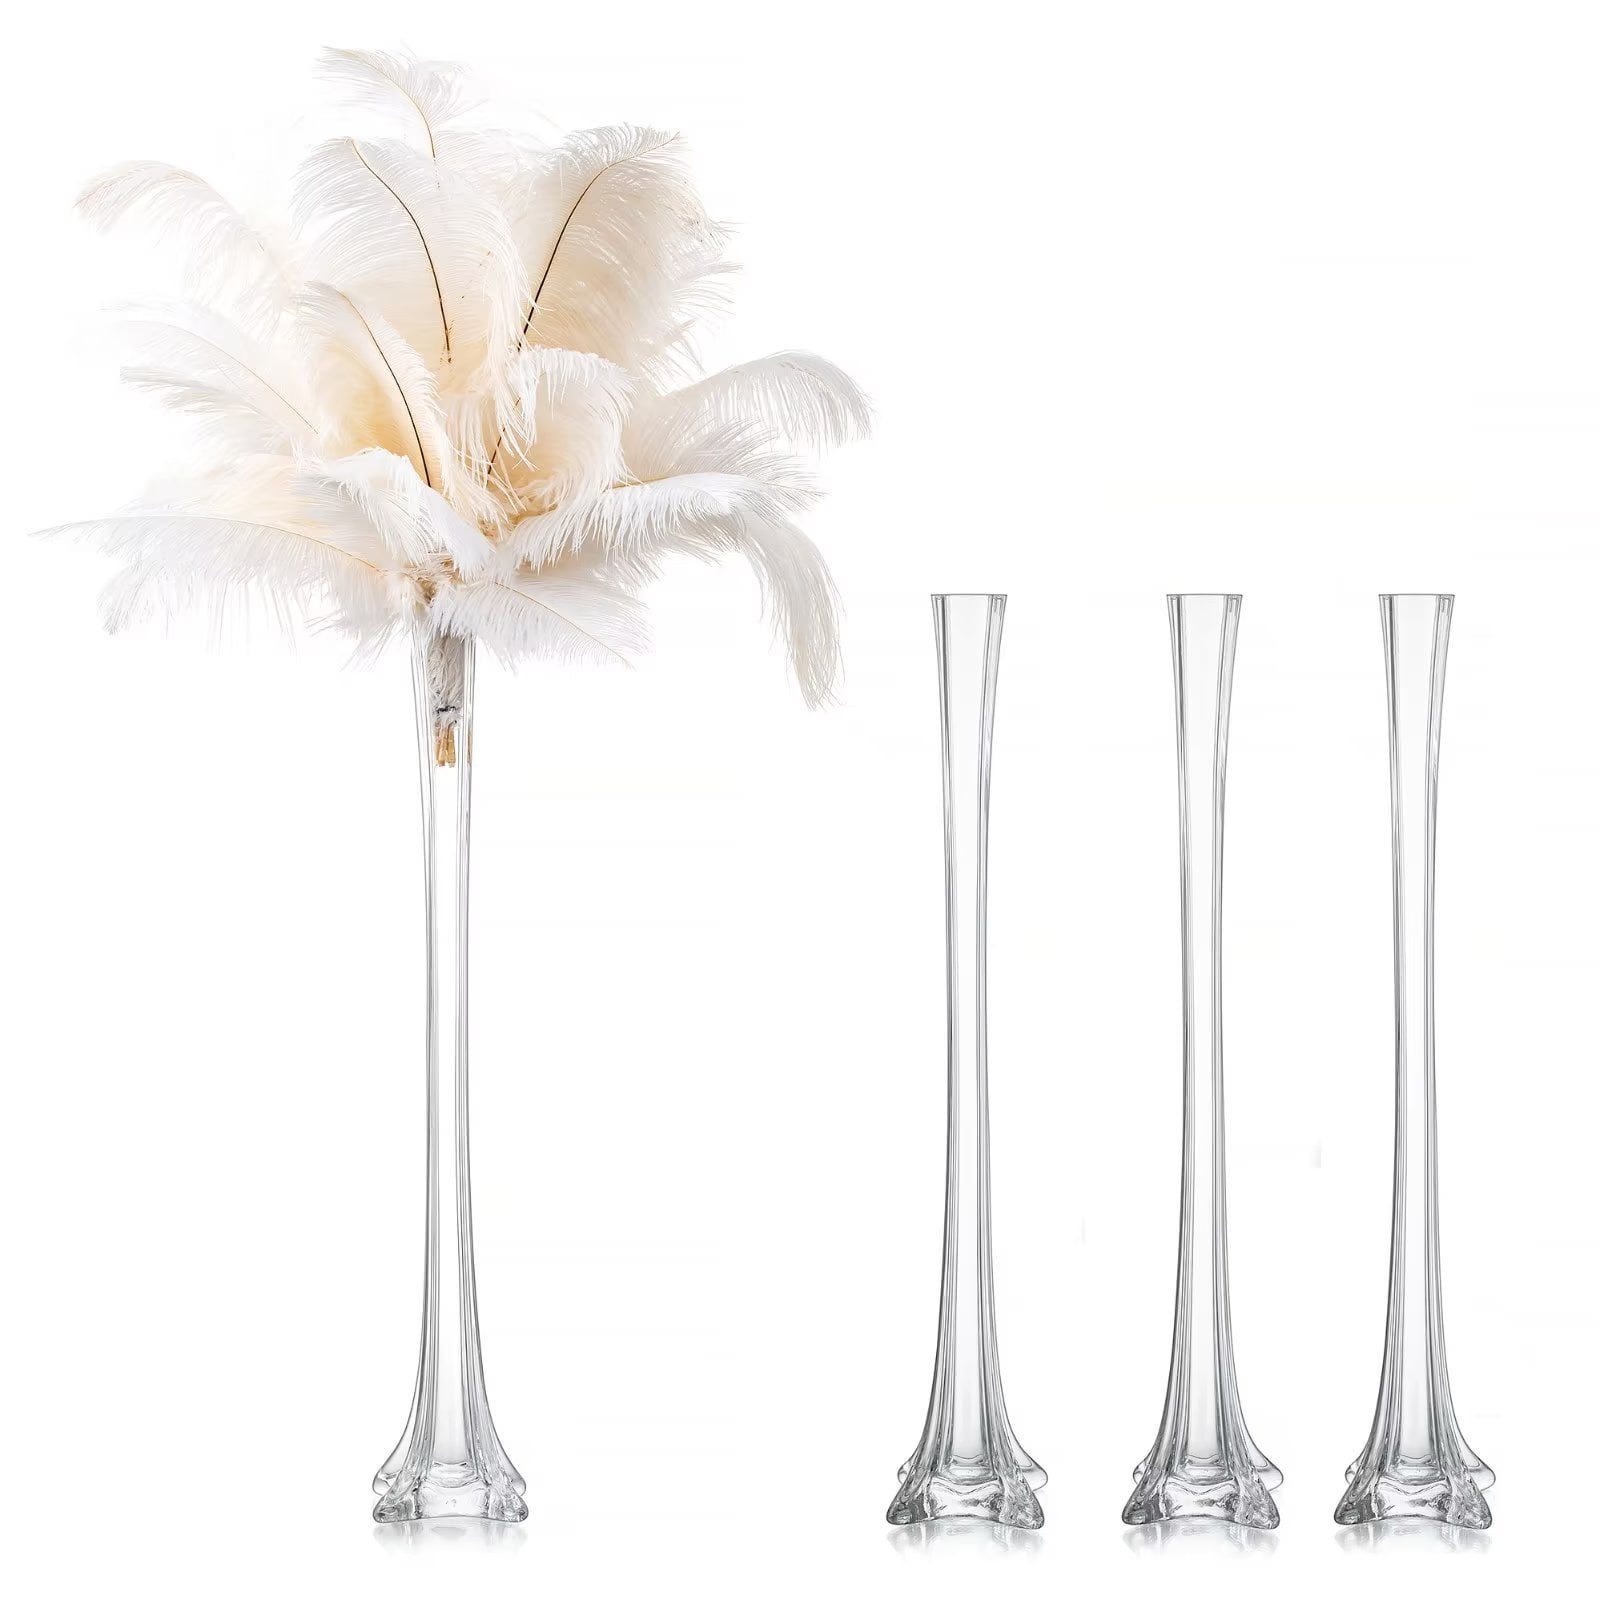  Inweder Tall Glass Vases for Centerpieces - 20 Eiffel Tower  Vase Bulk, Tall Skinny Vase, Long Thin Vase, Slim Decorative Flower Stand  Holder for Wedding, Anniversary, Event, Arts Crafts, Set of